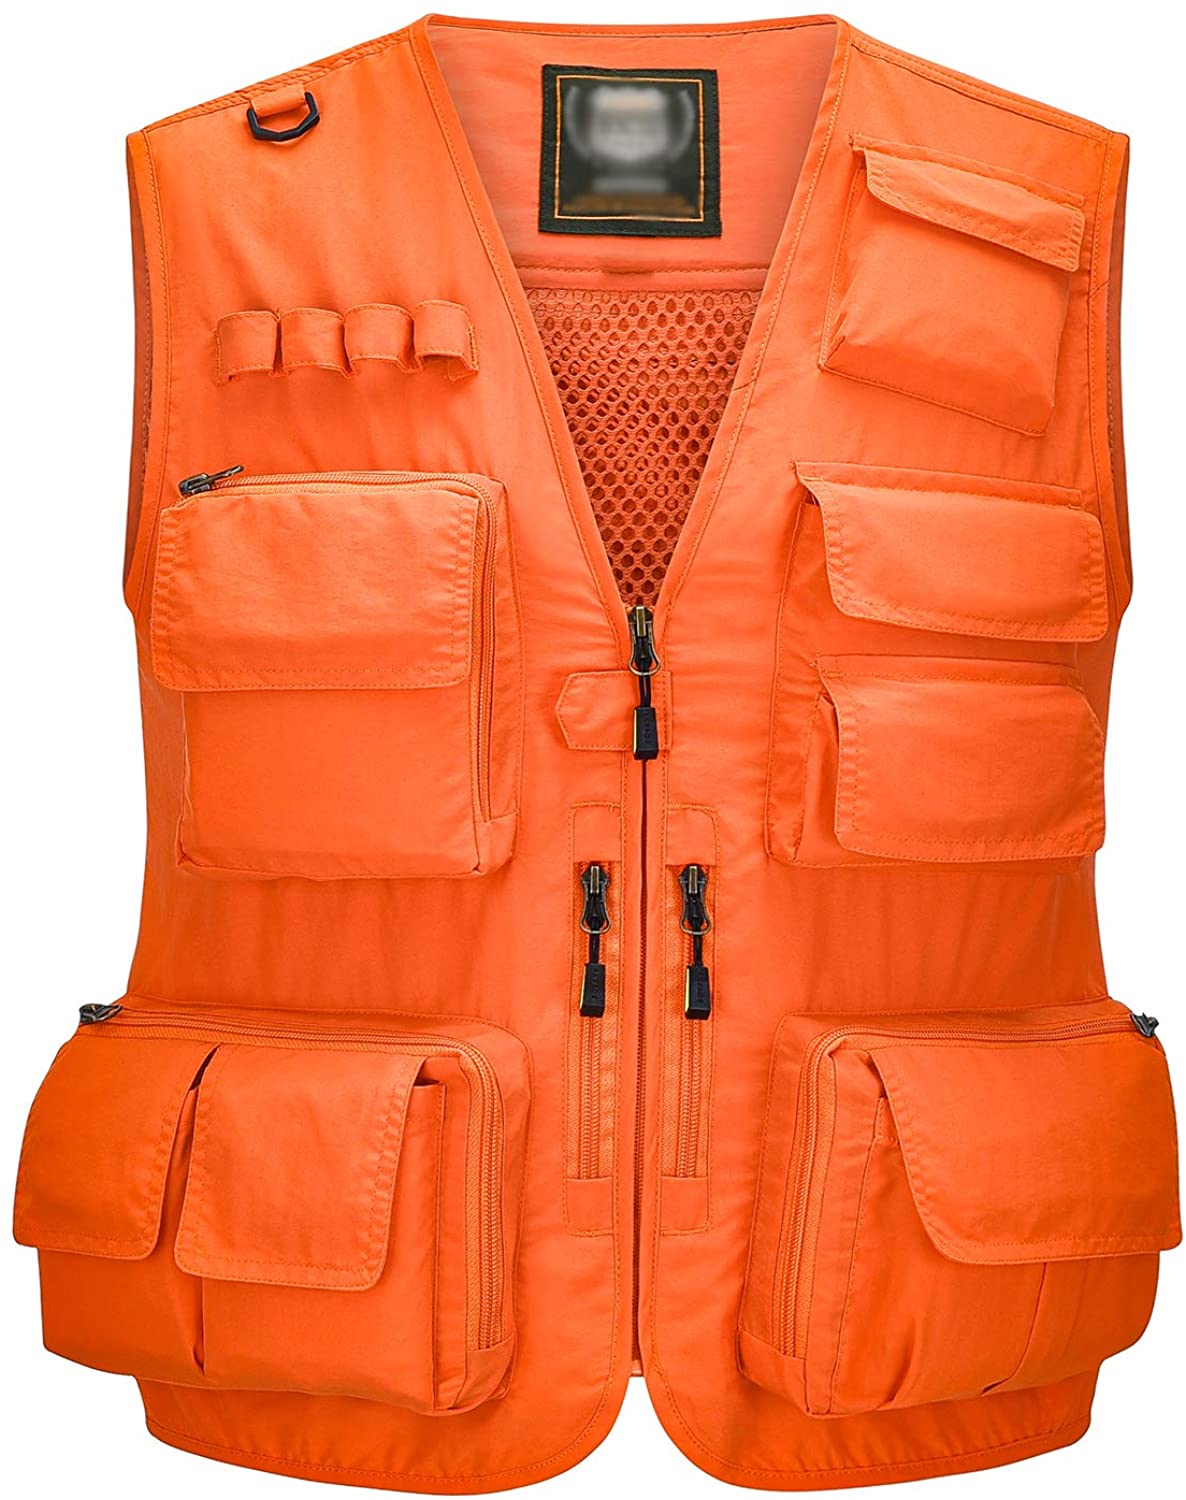 Spanye Vest Outdoor Men's Vests Summer Fishing Photography Quick Dry Waistcoat Multi-pocket